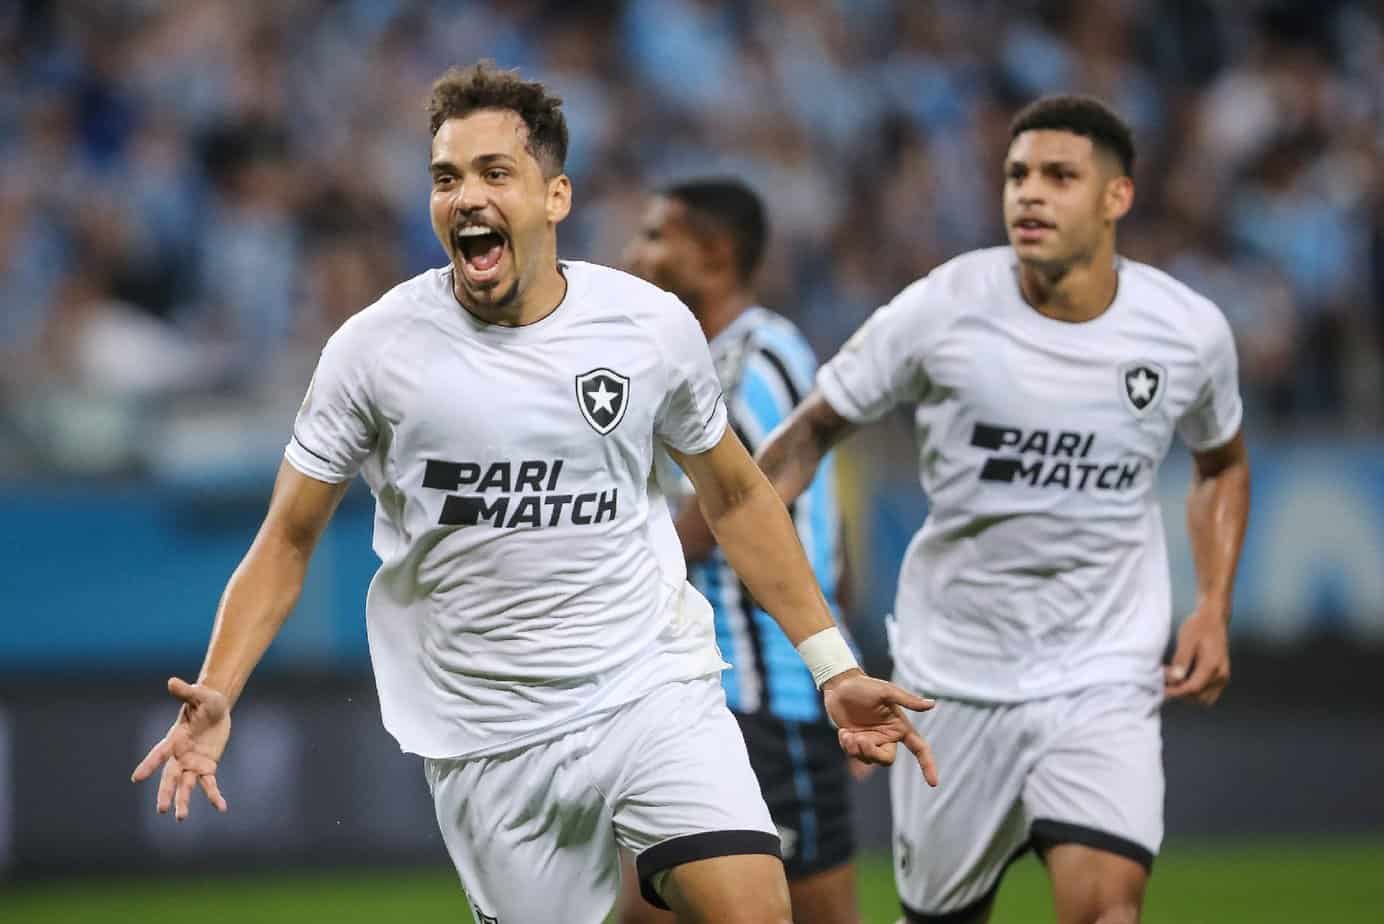 Botafogo vs. Grêmio Preview and Betting Odds